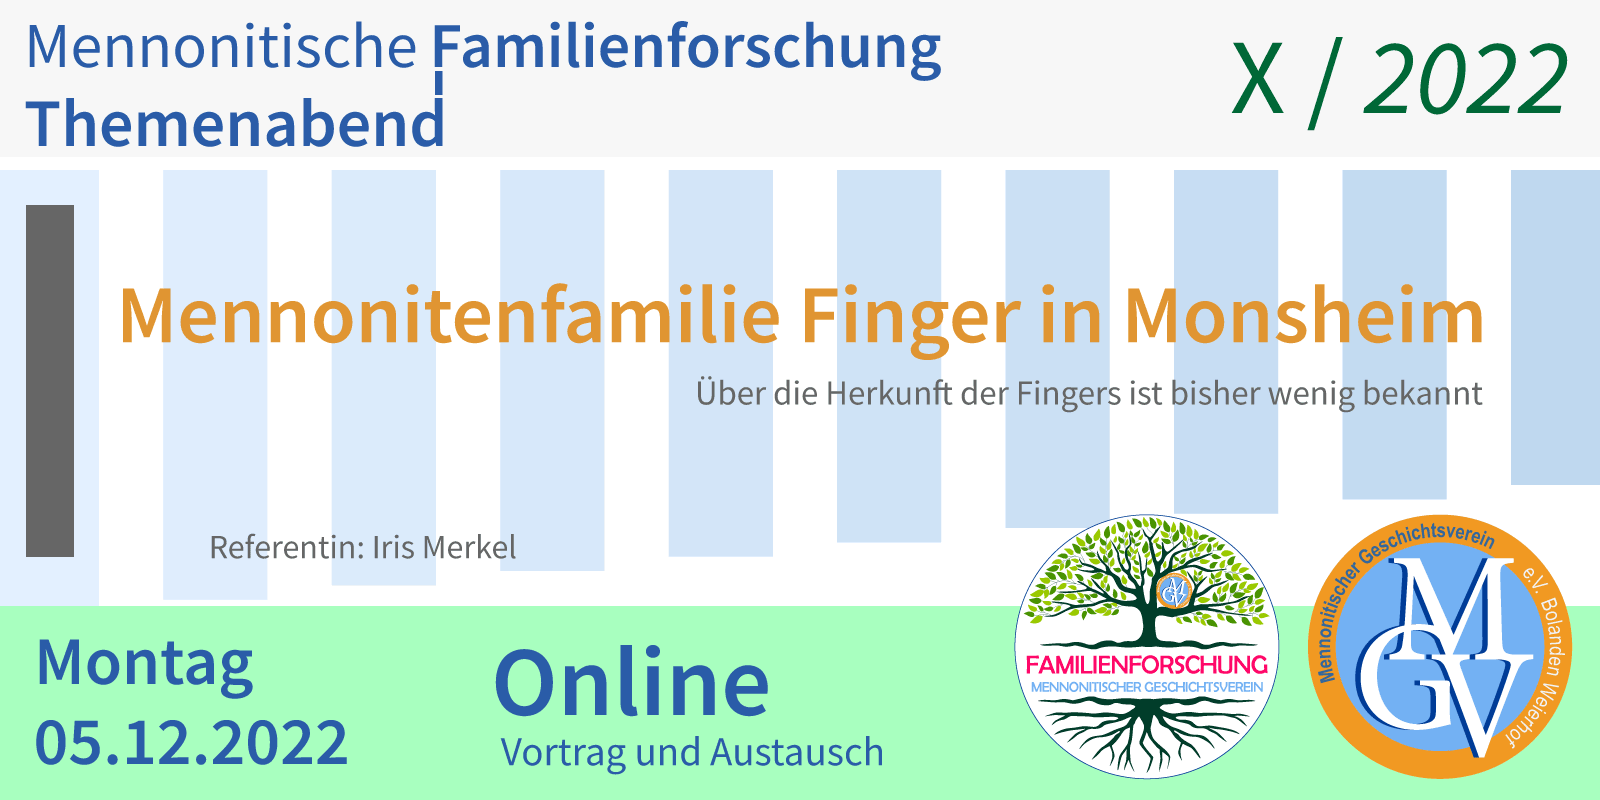 Finger, Mennonitenfamilie Finger, Familienforschung Mennonitischer Geschichtsverein, Forschungsstelle.